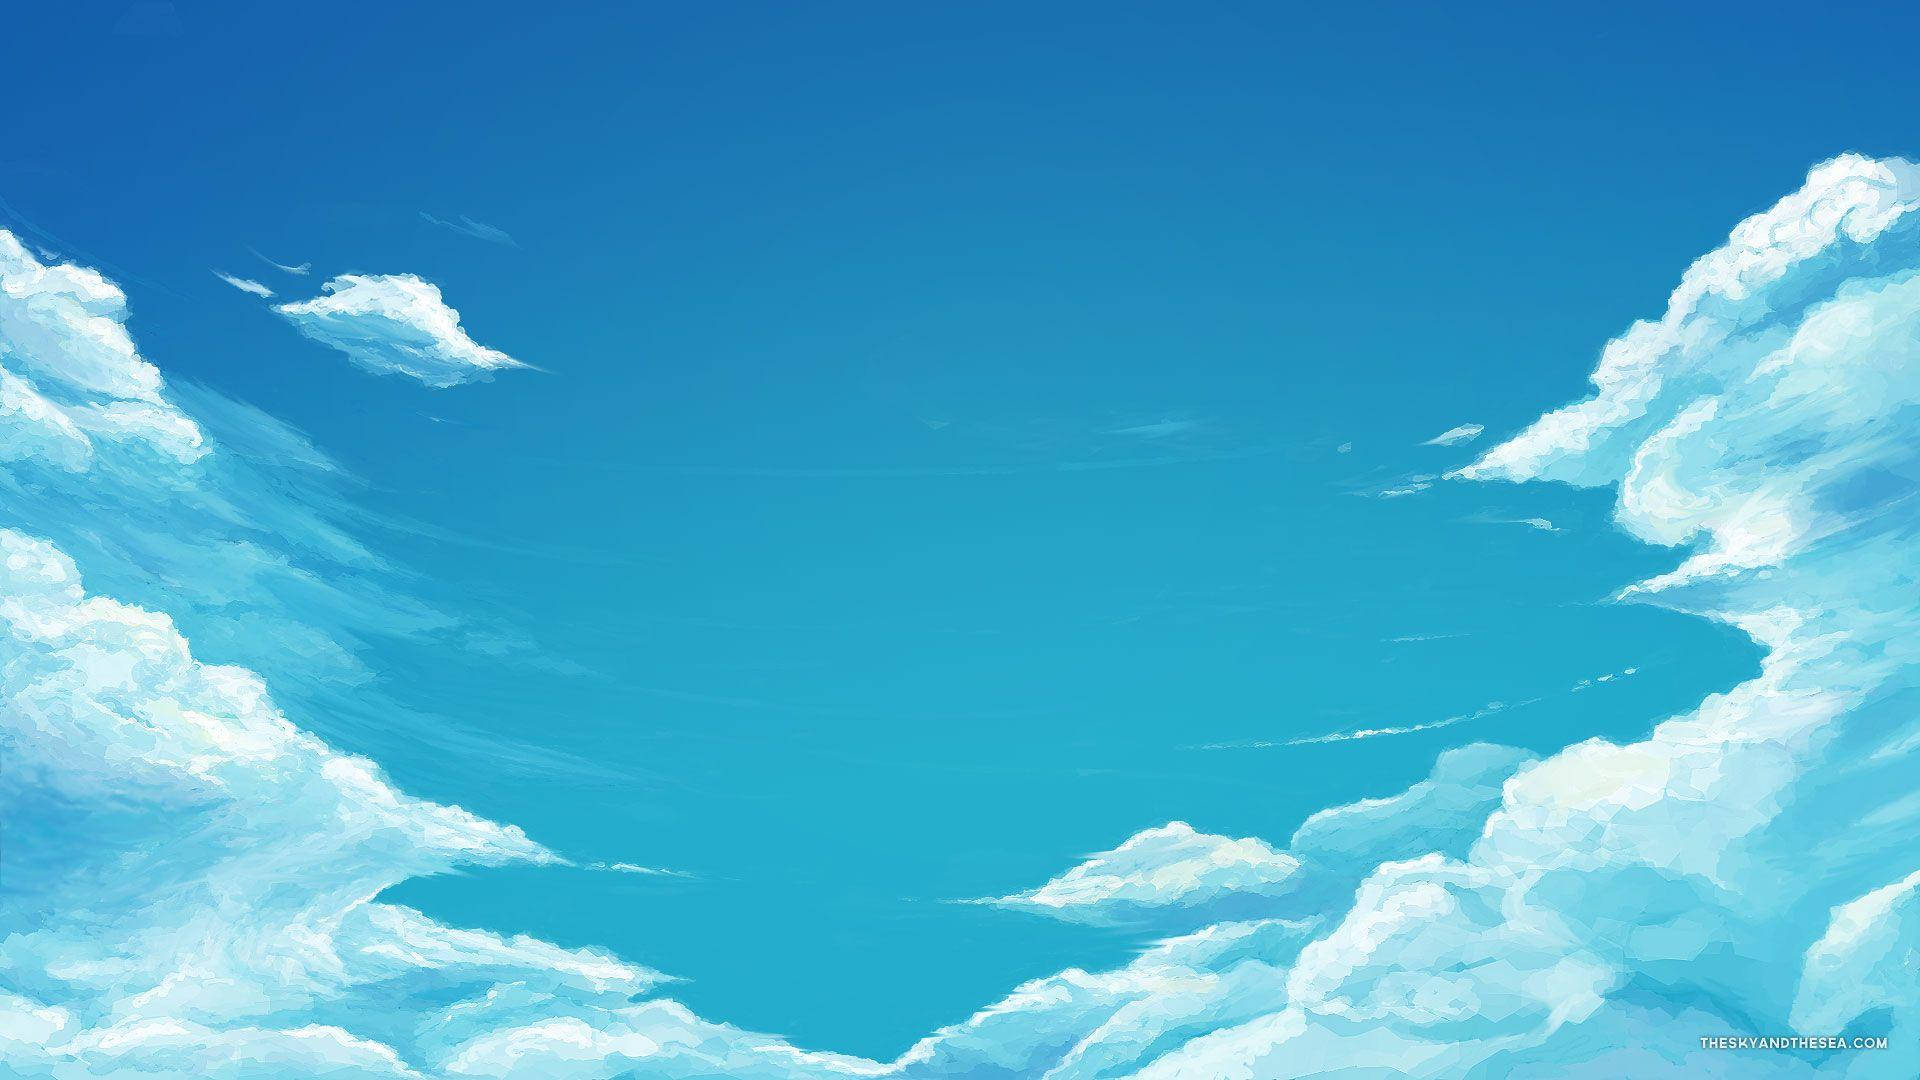 Endrömsk Blå Anime-miljö. Wallpaper